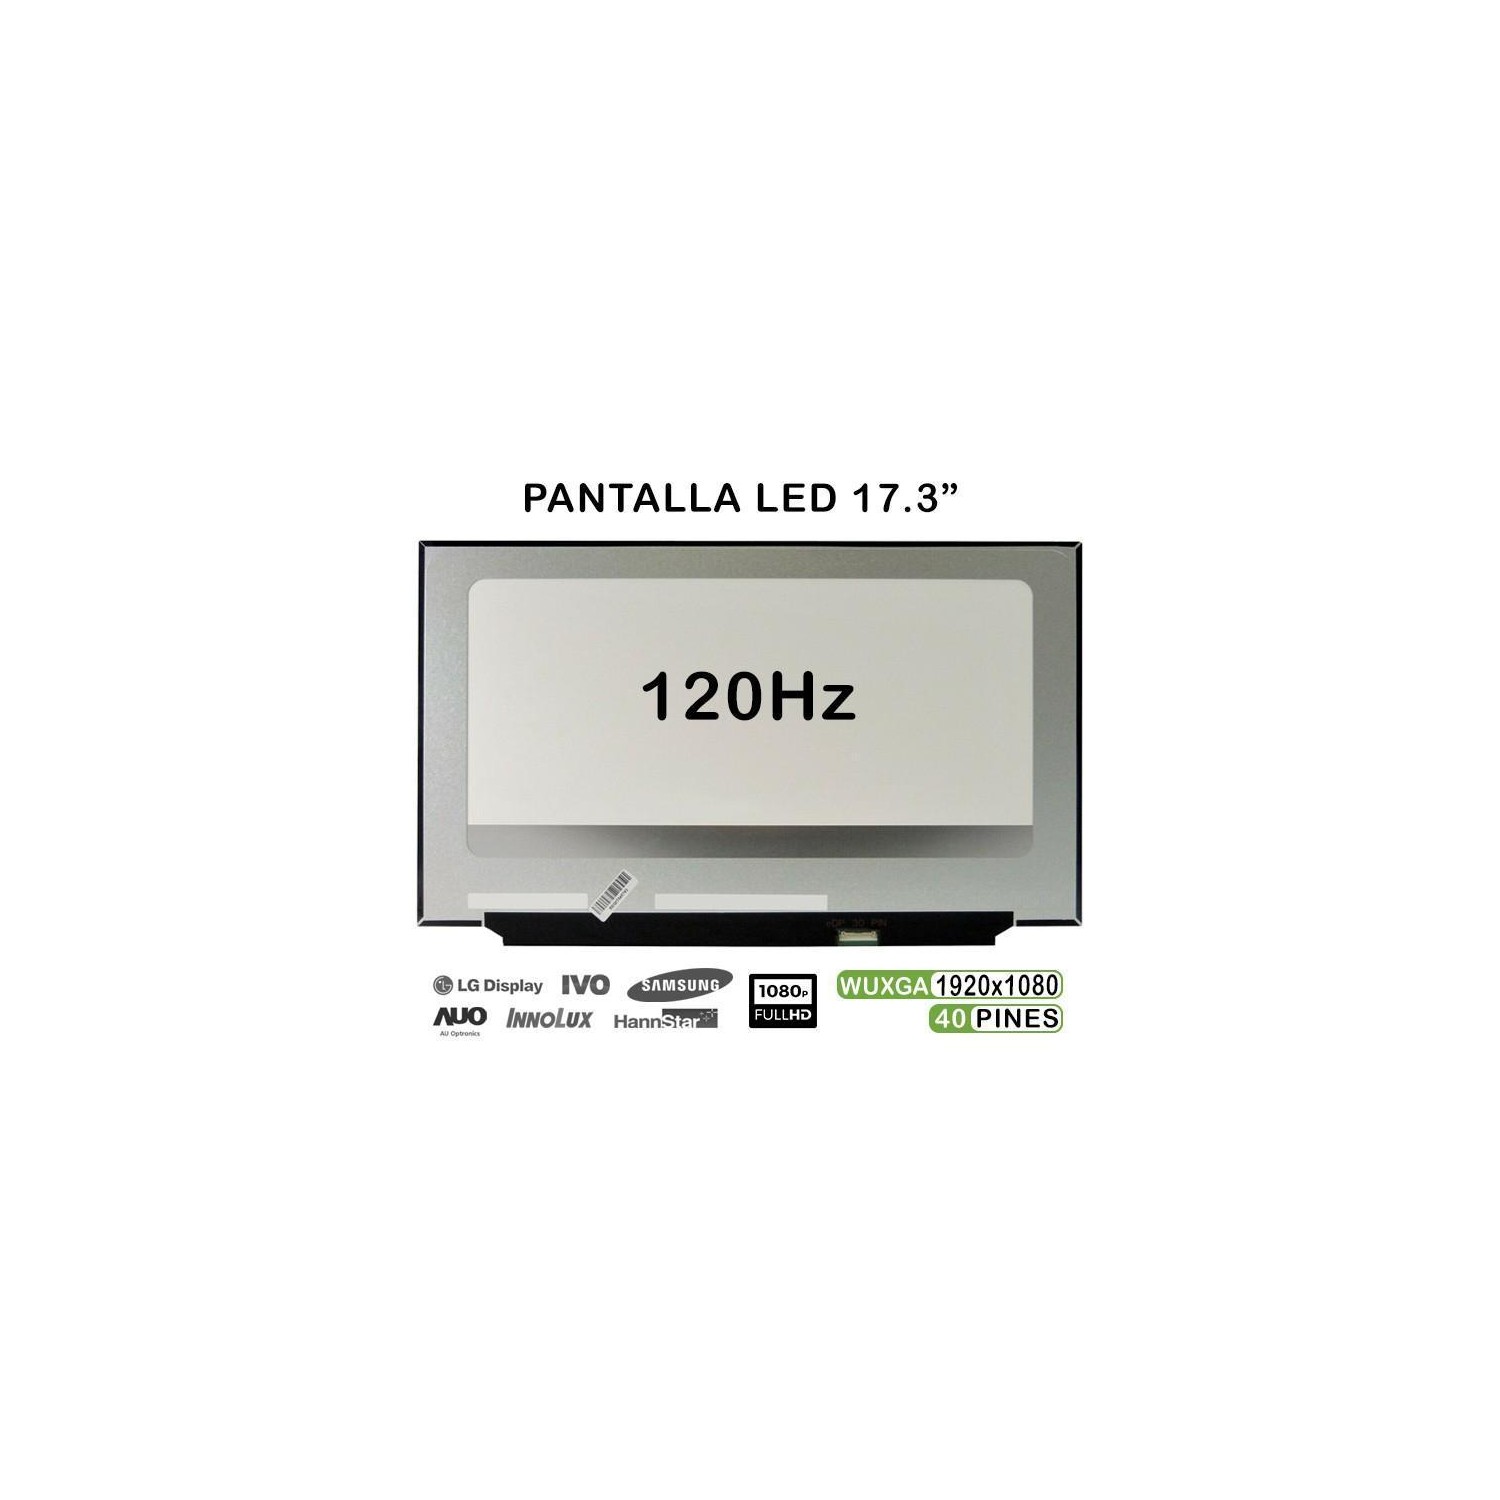 PANTALLA LED DE 17.3" PARA PORTÁTIL B173HAN04.7 1920X1080 120HZ 30 PINES